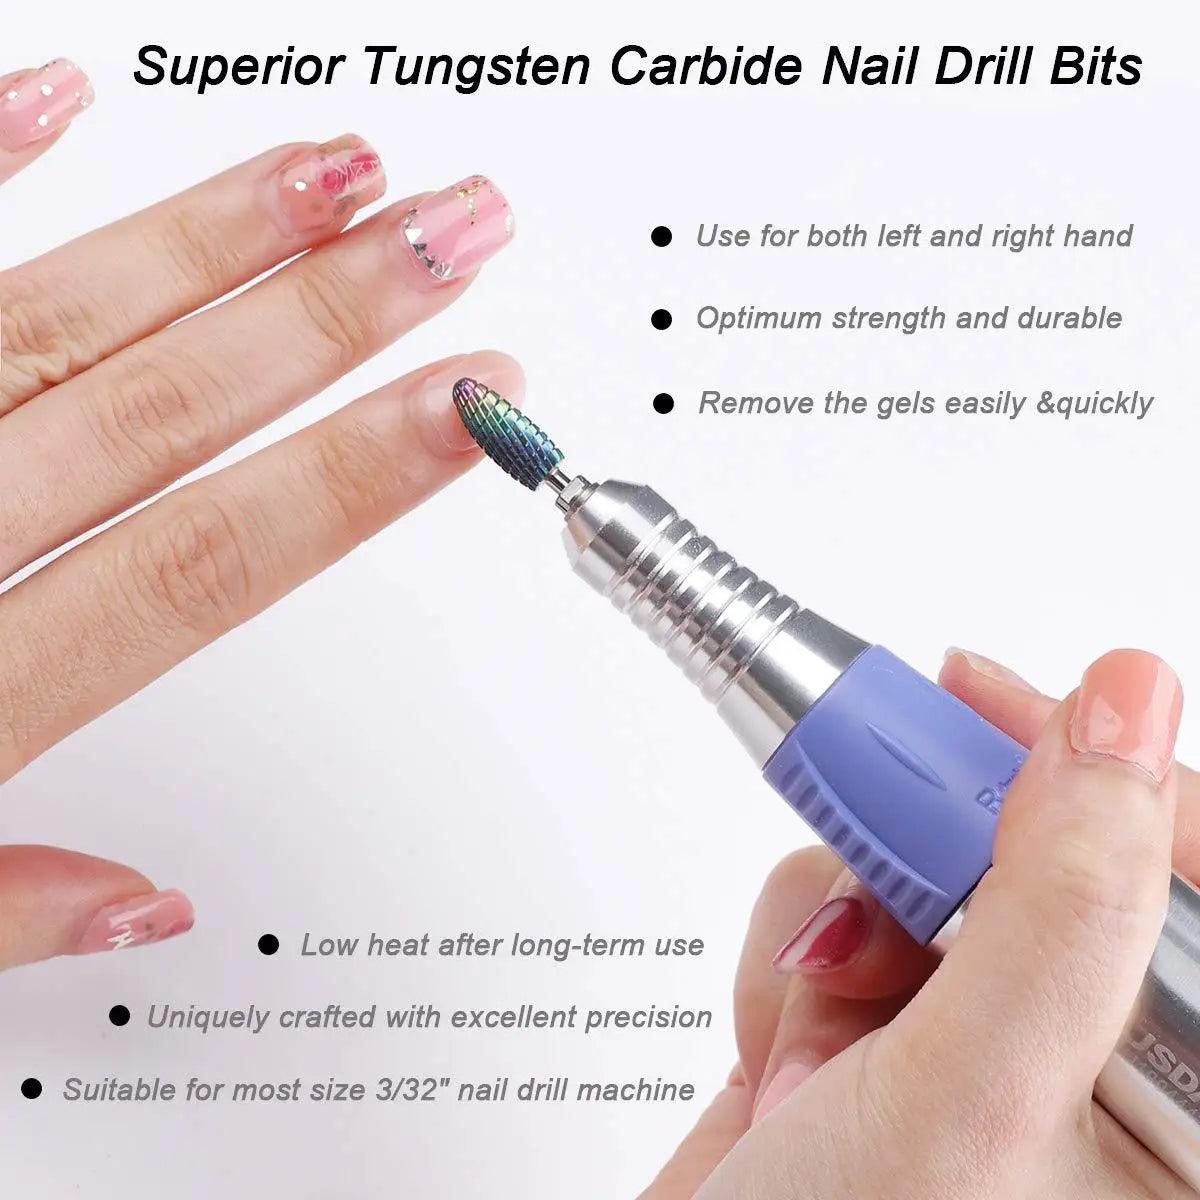 67-Piece Carbide Nail Drill Bit Set for Professional Manicure and Pedicure  ourlum.com   